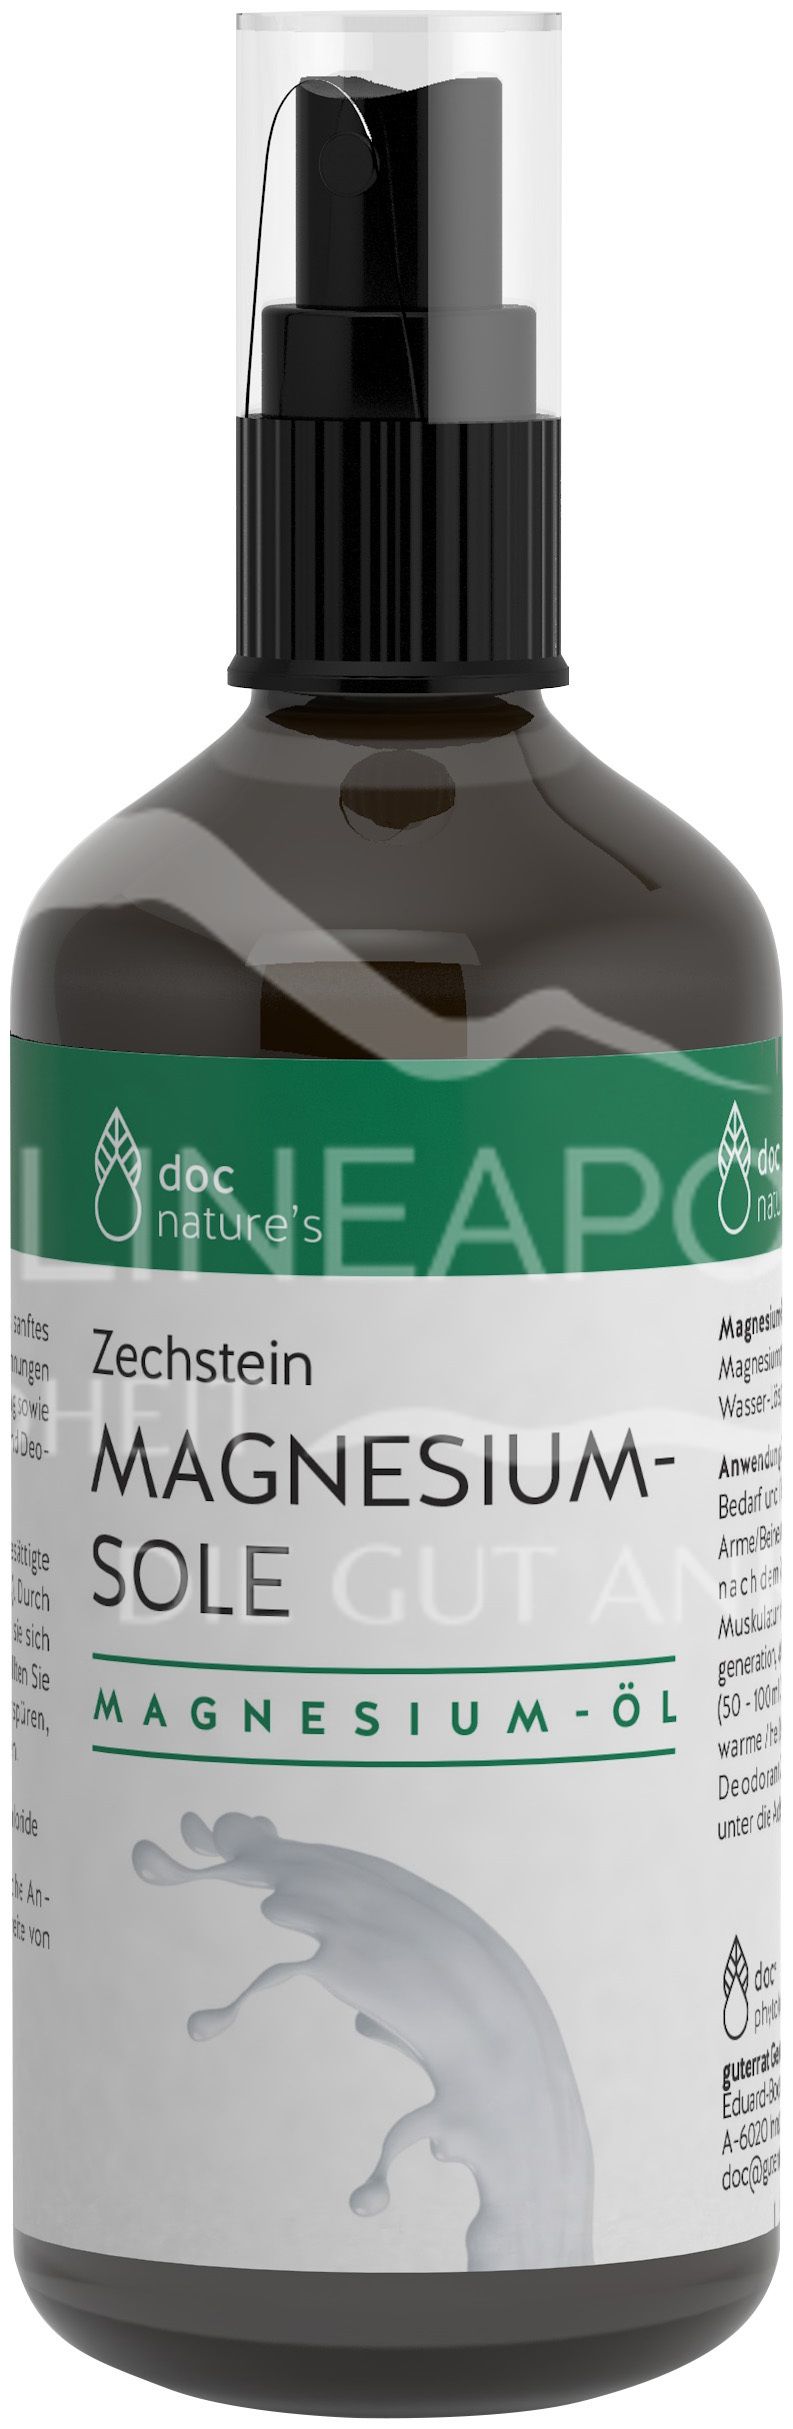 doc nature’s Zechstein MAGNESIUM-SOLE Magnesium-Öl Spray